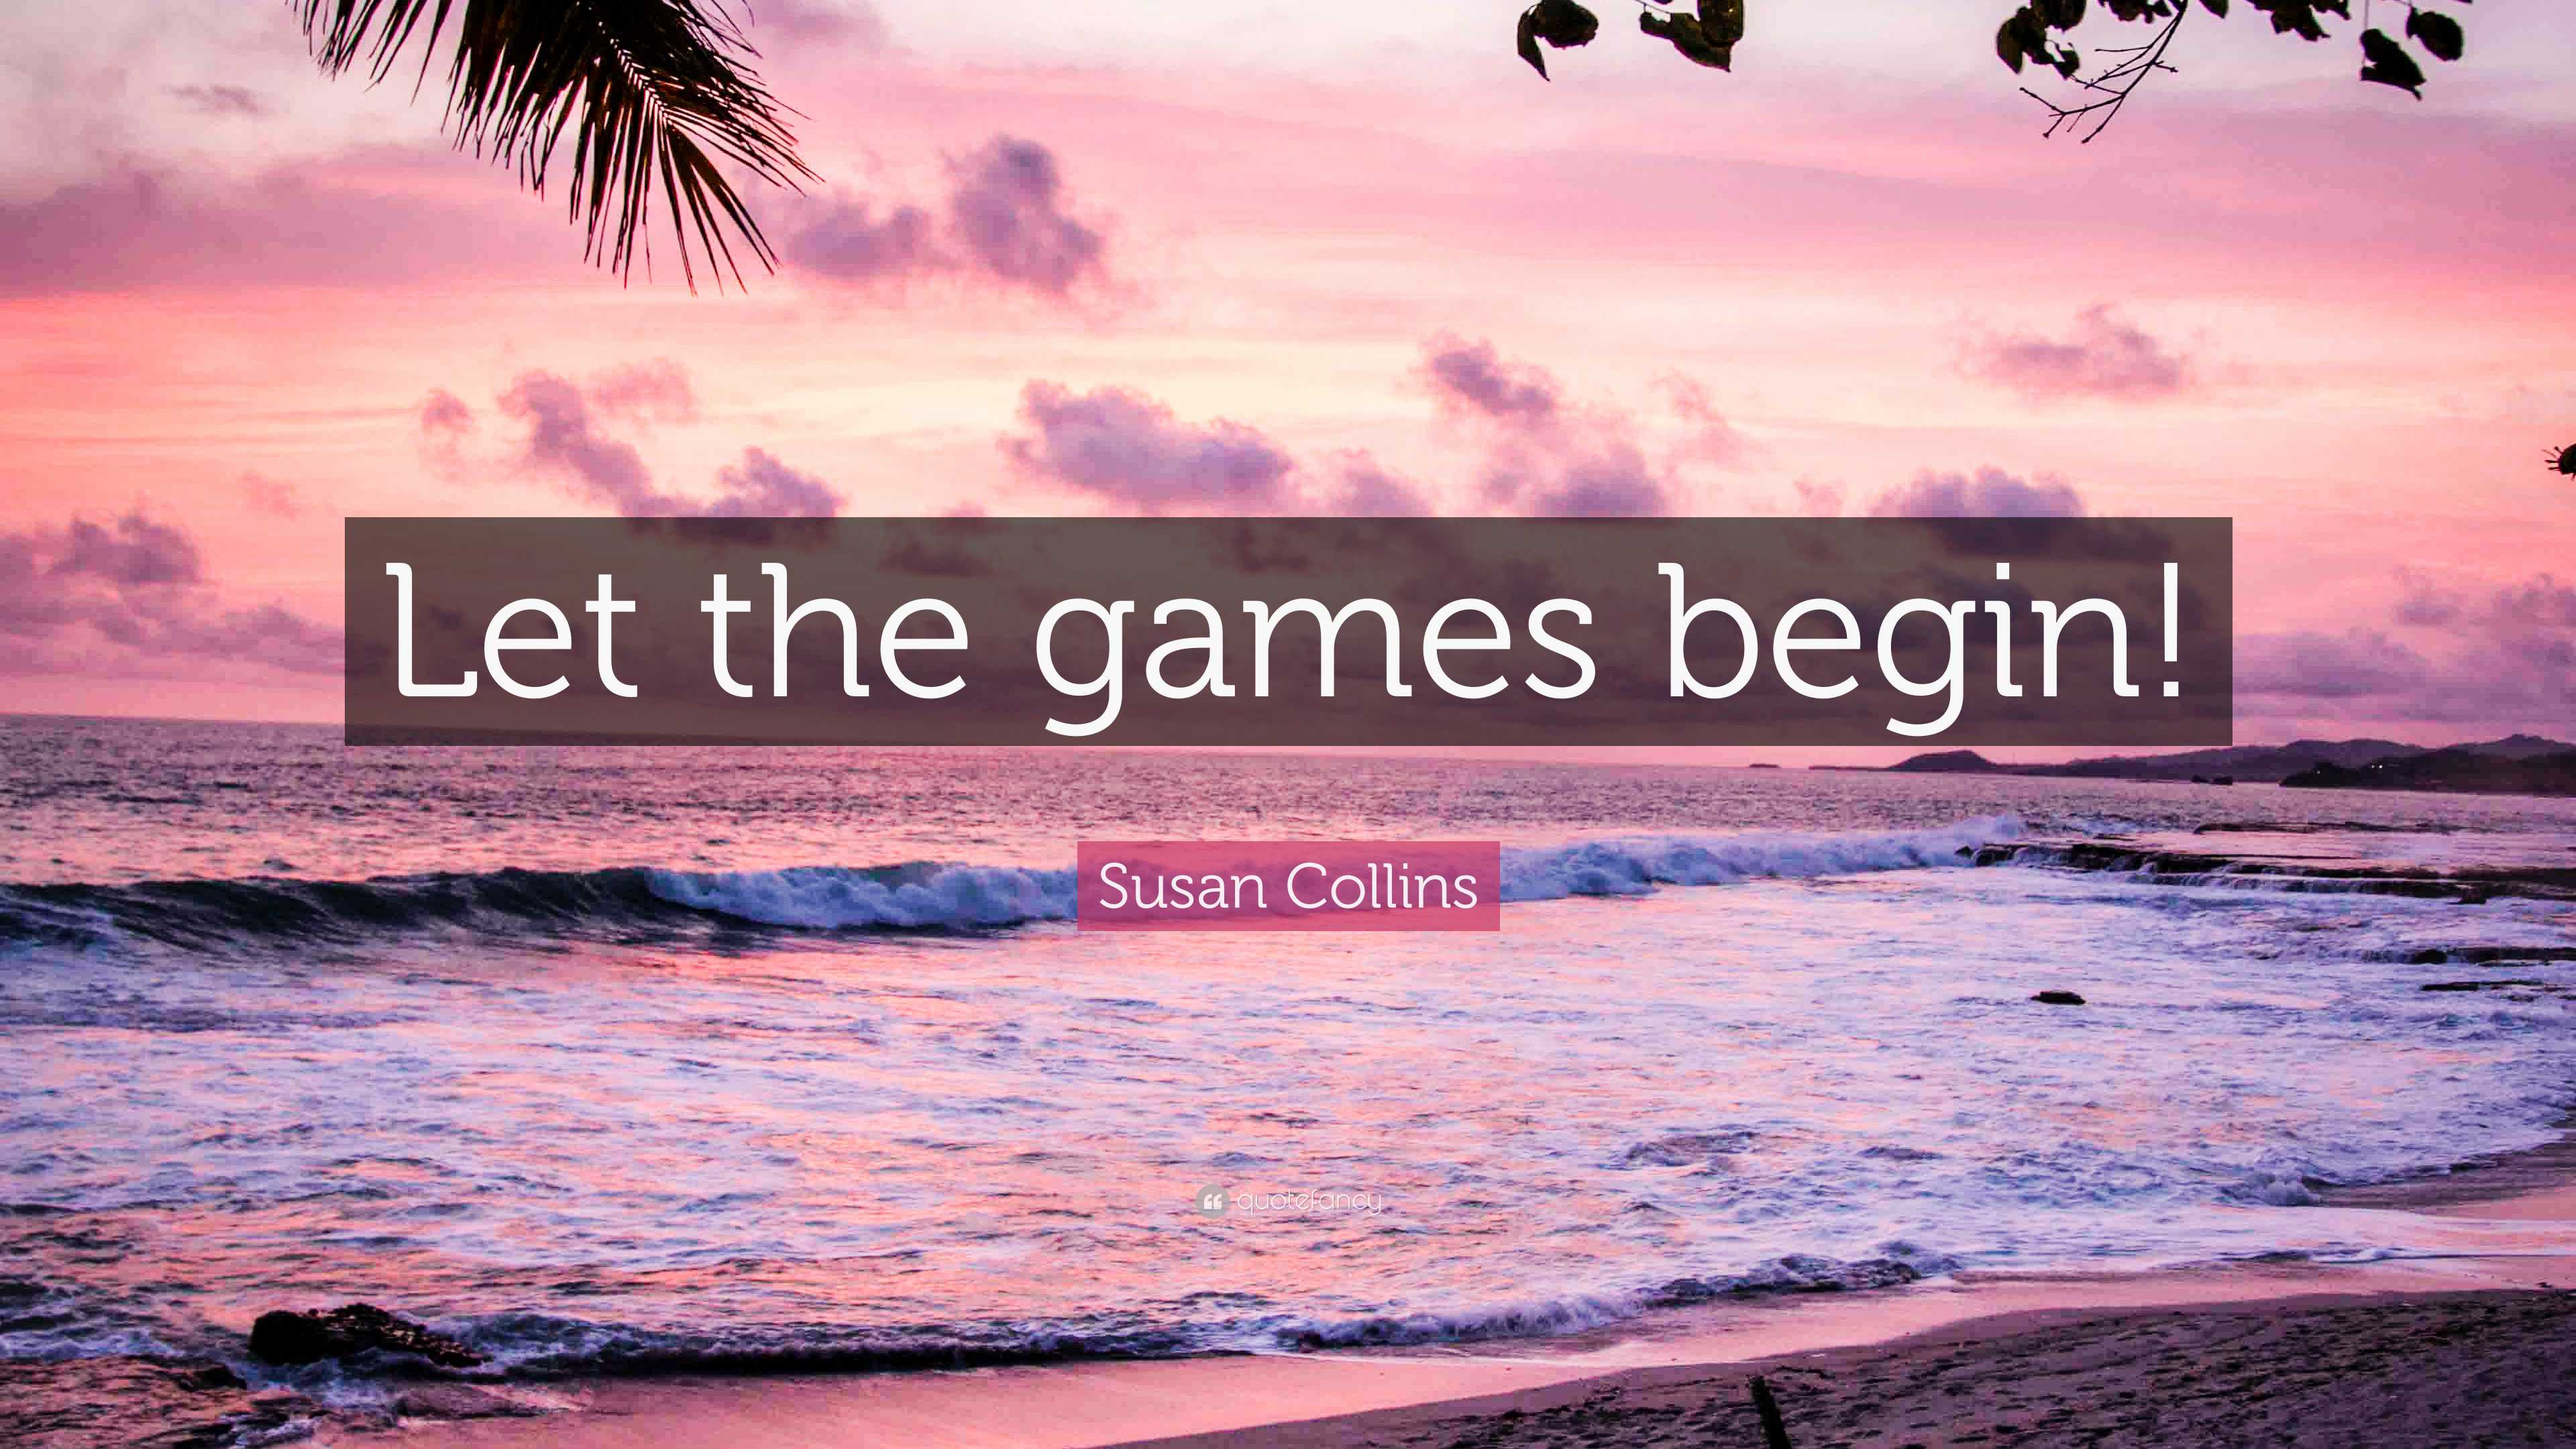 Susan Collins Quote: “Let the games begin!”